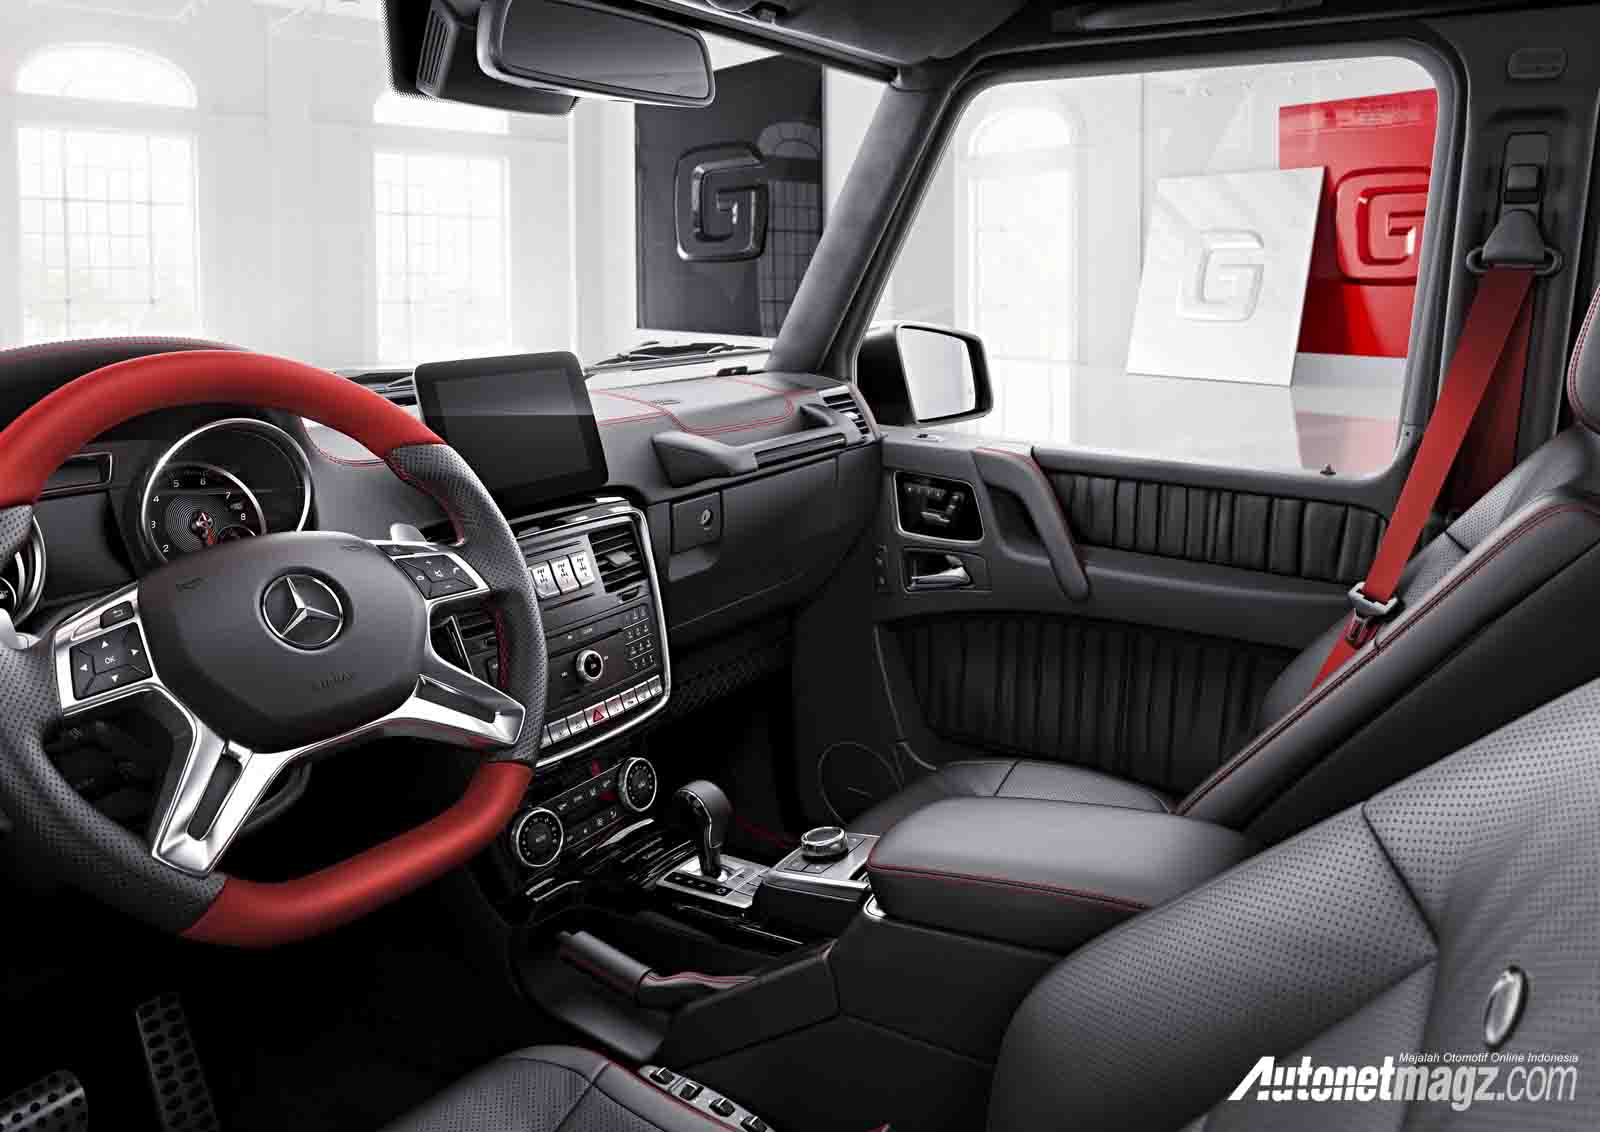 Berita, interior Mercedes-Benz G-Class simpel edition: Mercedes-Benz Perkenalkan Dua Edisi Spesial dari G-Class